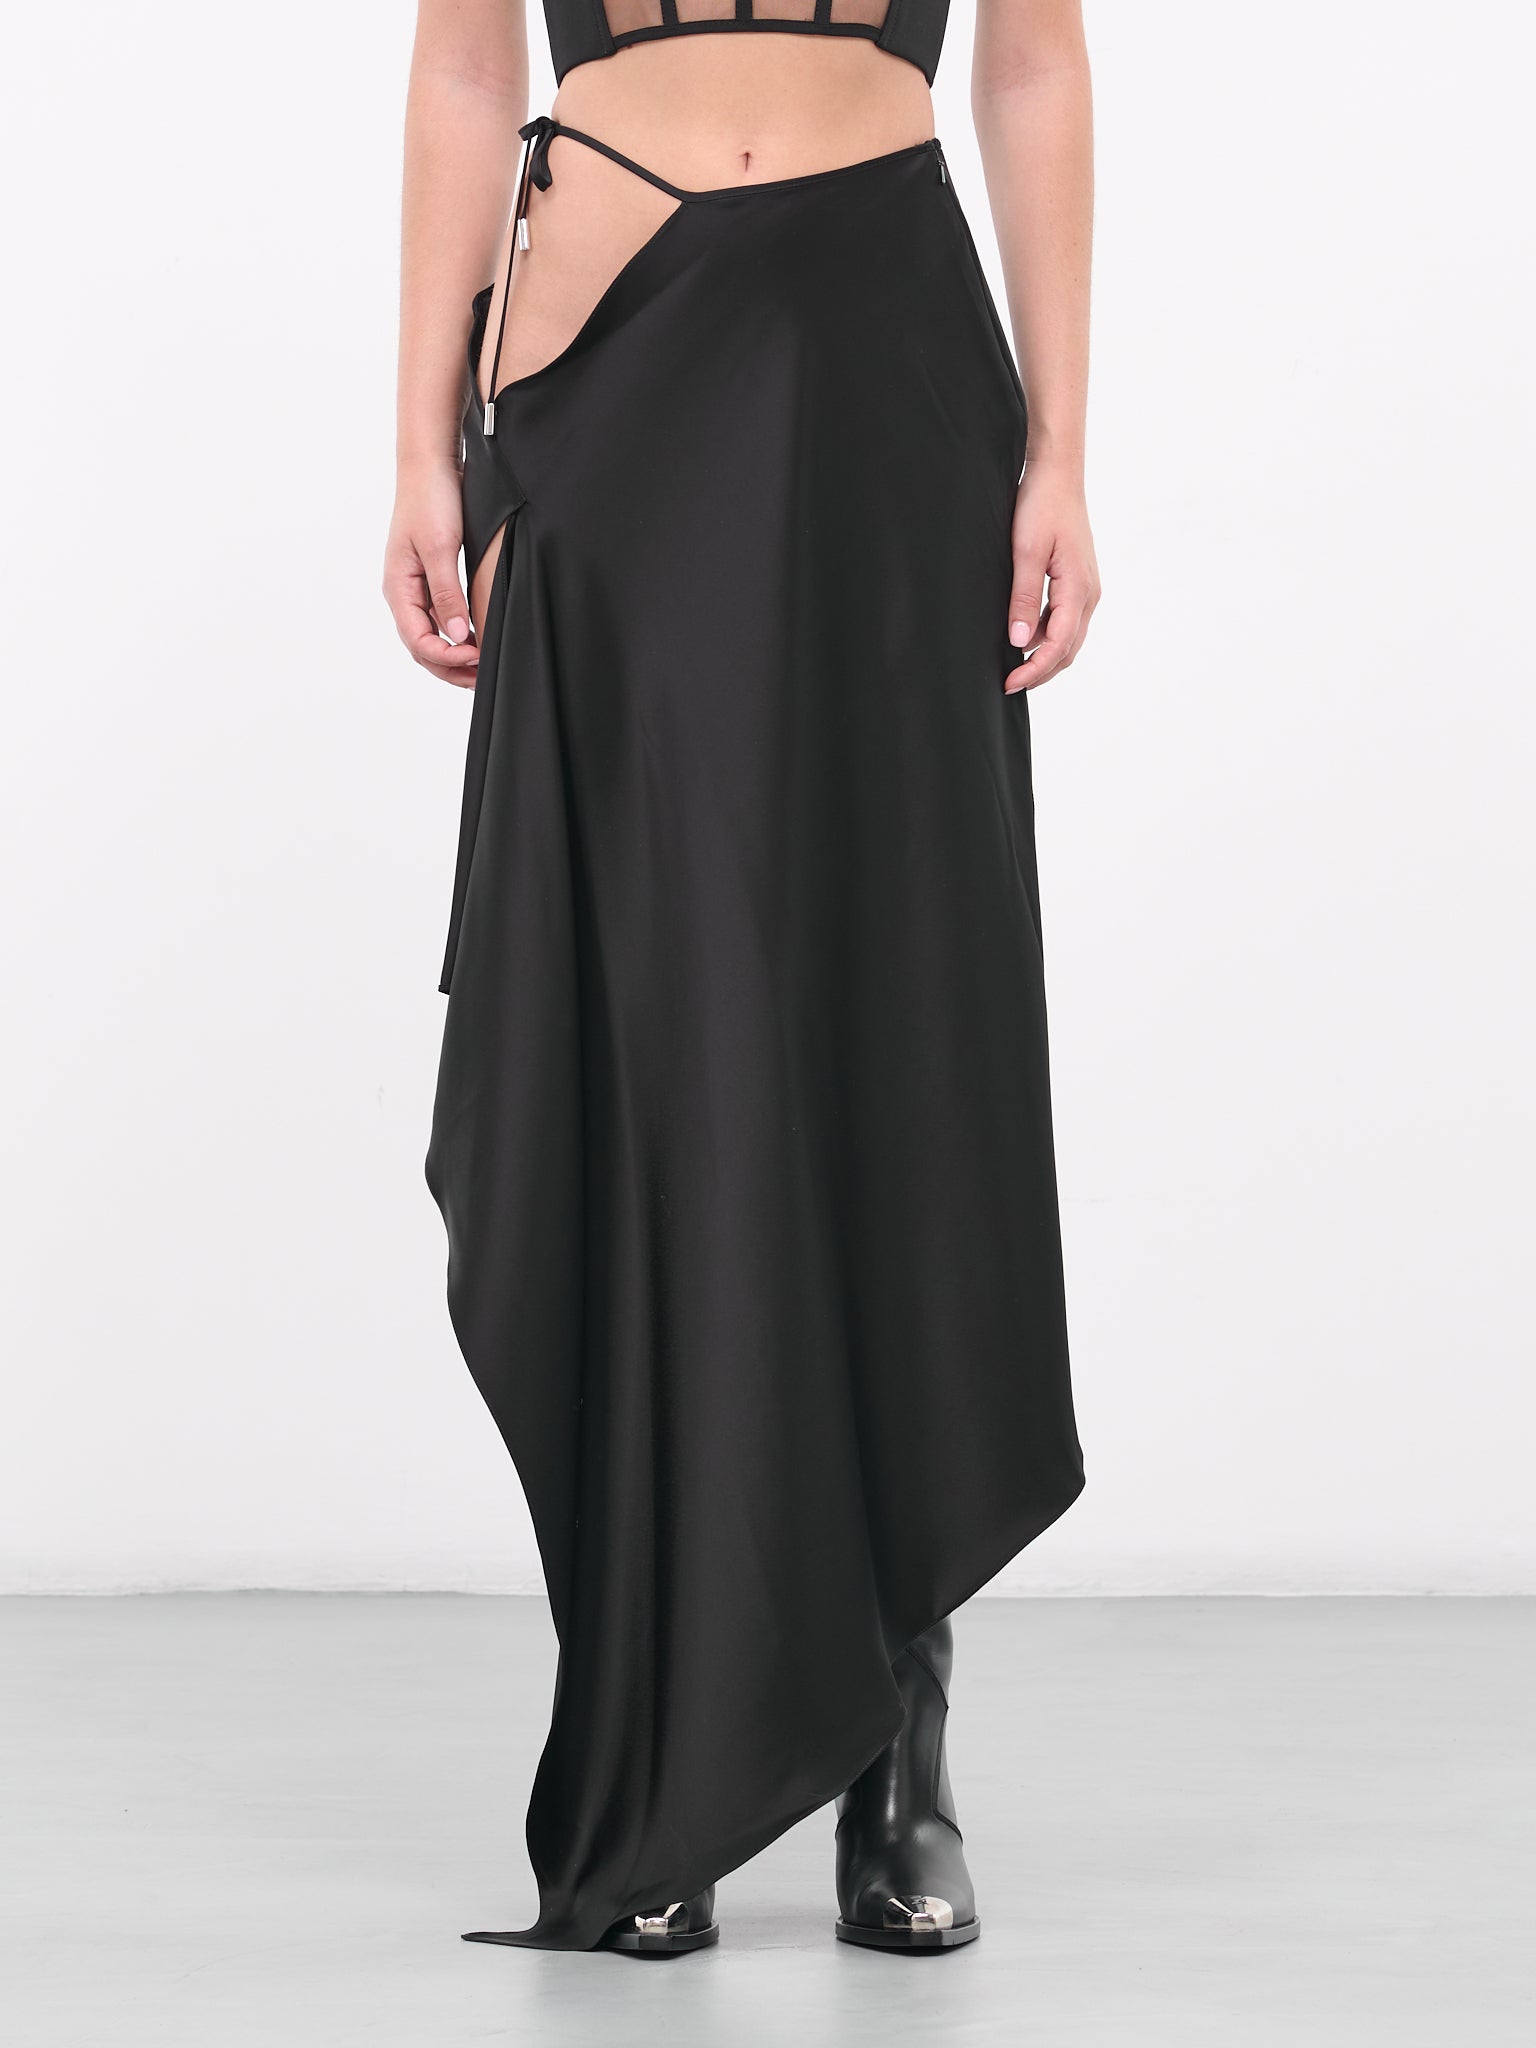 Cut-Out Satin Skirt (DK05S-BLACK)